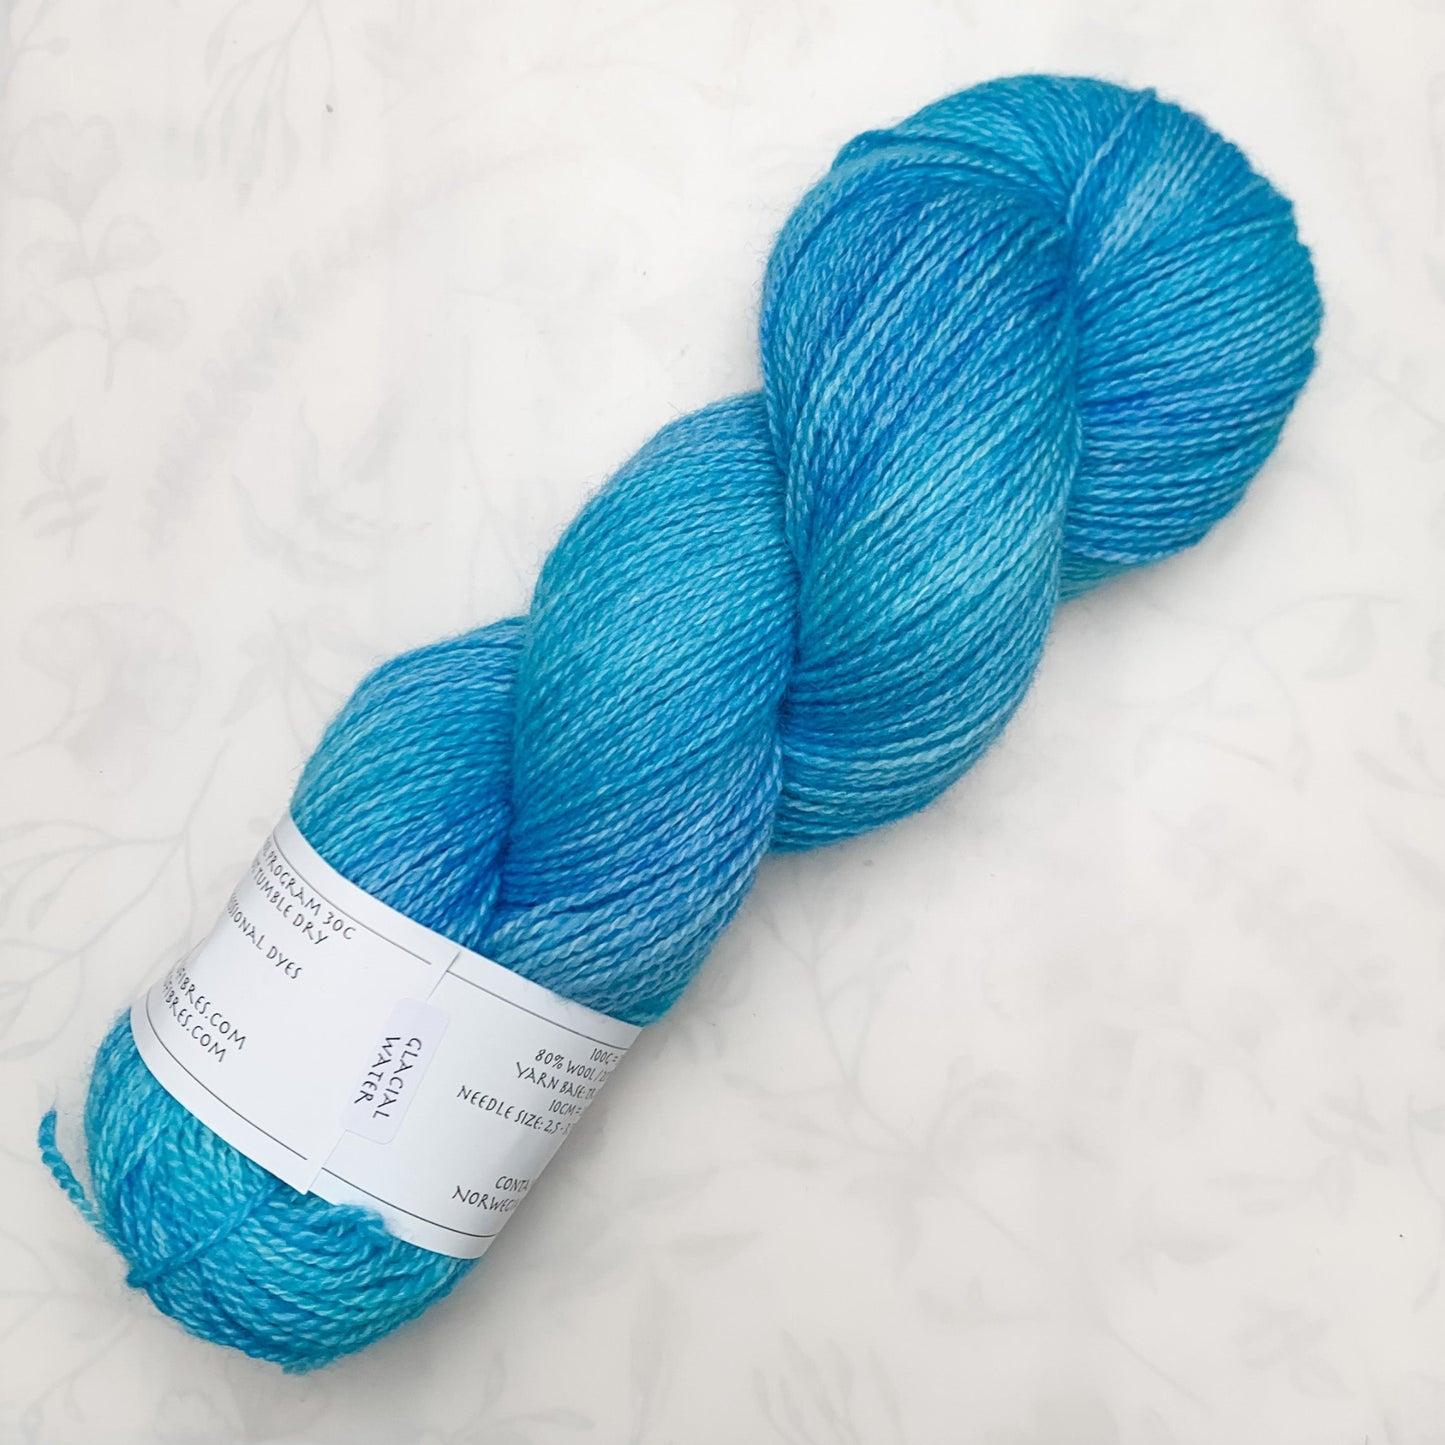 Glacial Water - Trollfjord sock - Hand Dyed Yarn - Variegated Yarn